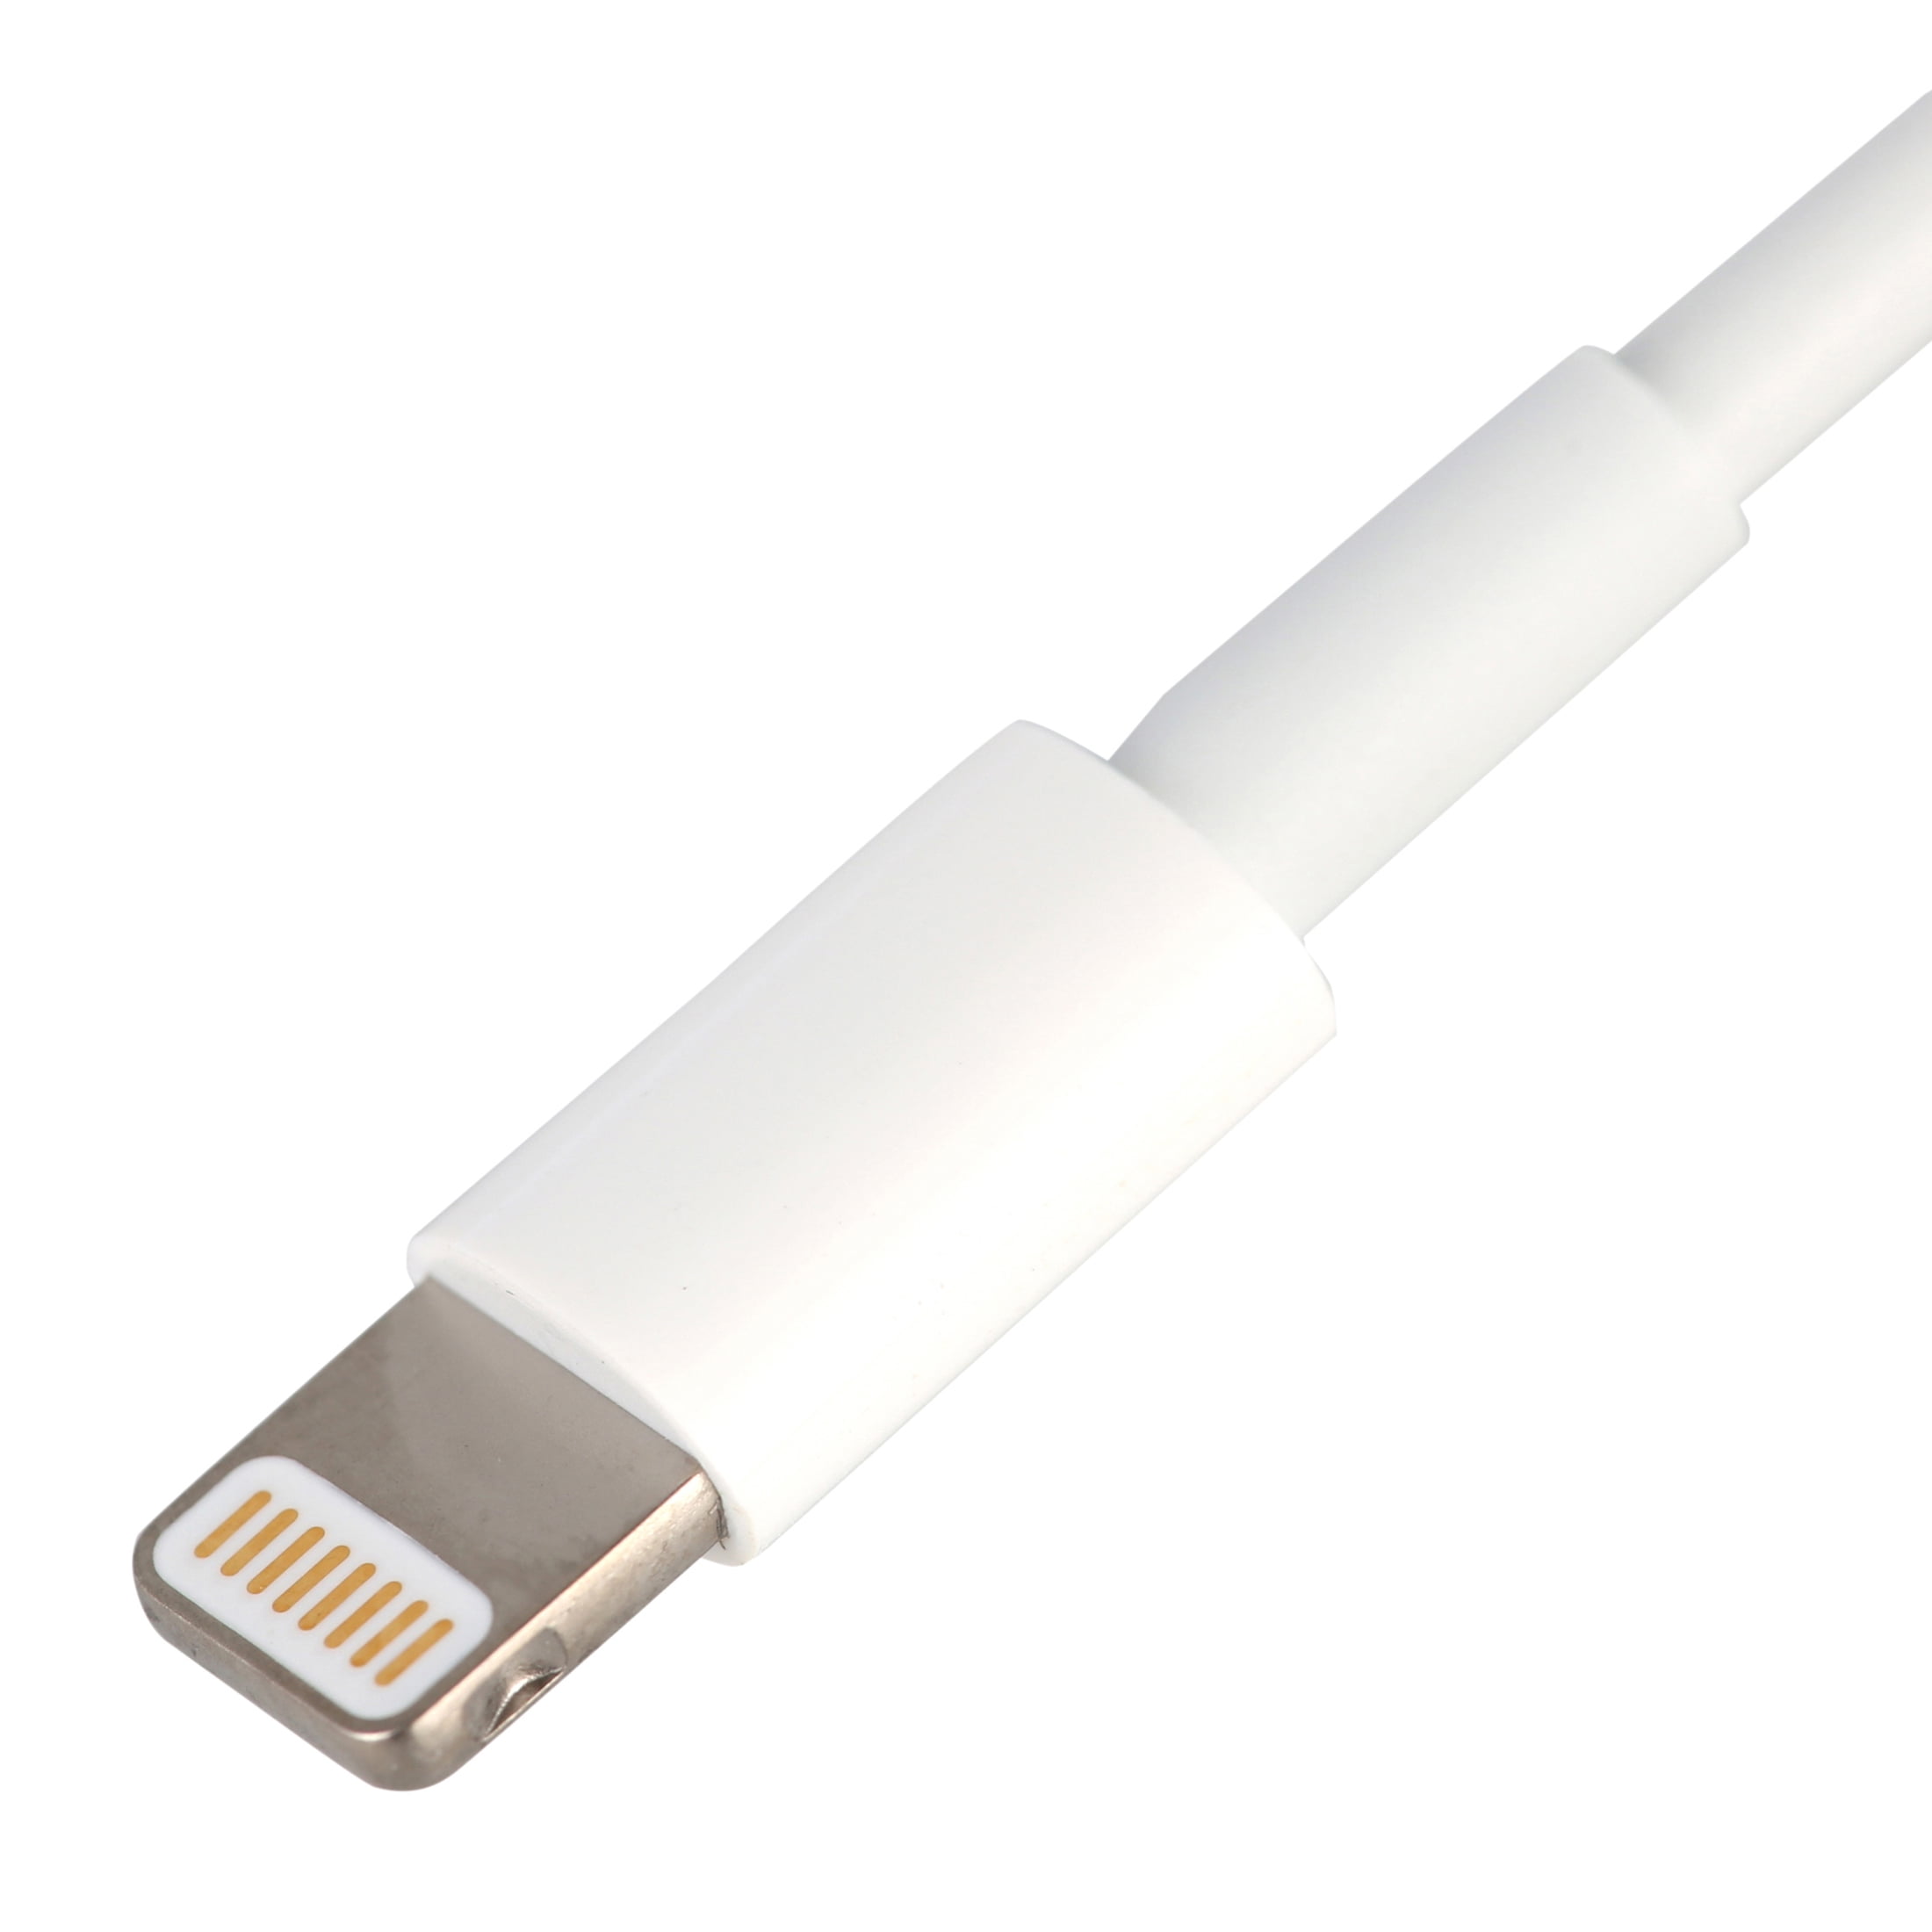 Apple Lightning to USB Cable (1m) - White Walmart.com